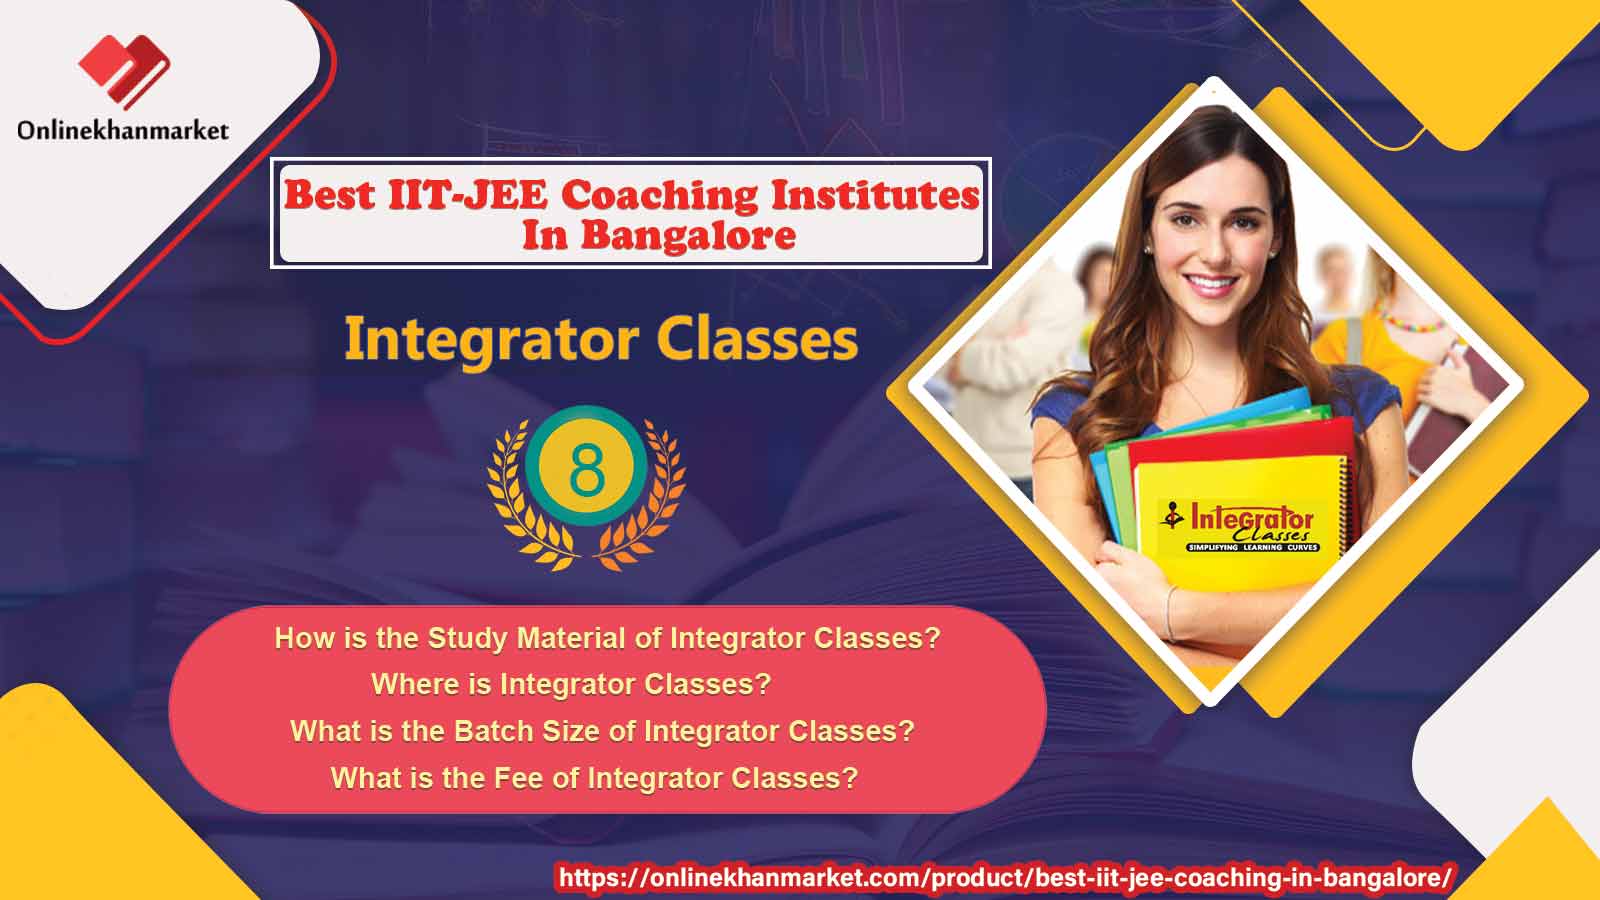 Best IIT JEE Coaching in Bangalore